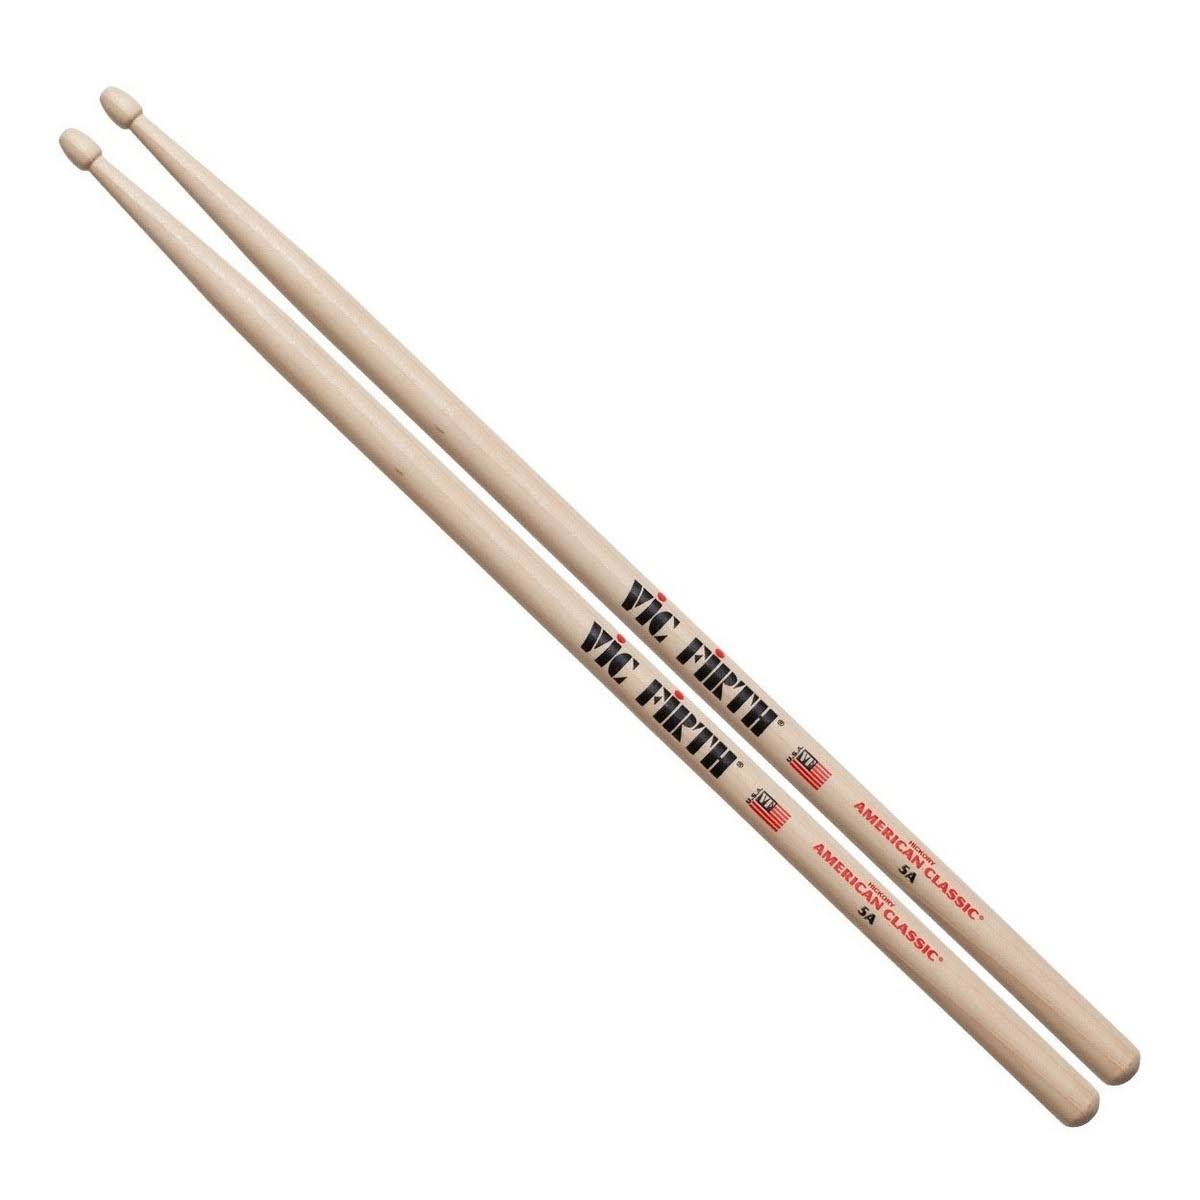 Vic Firth American Classic Drumsticks - 5A